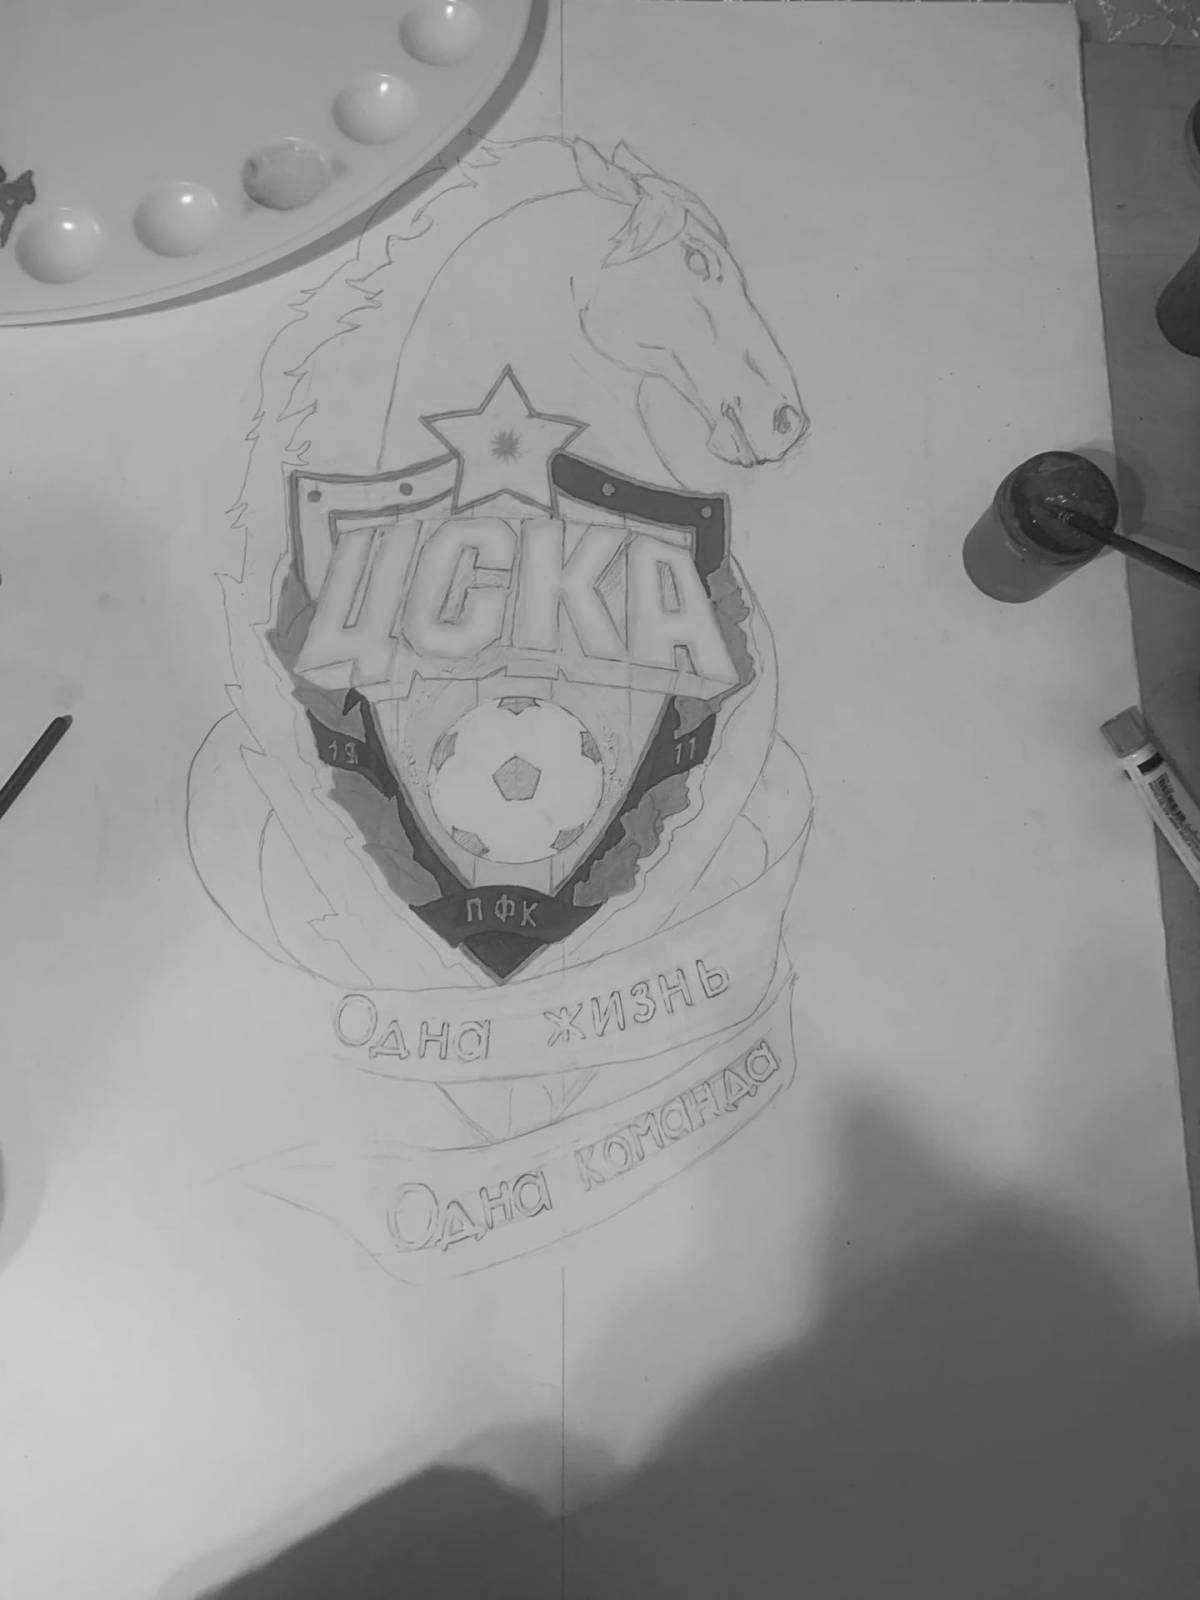 Attractive CSKA logo coloring